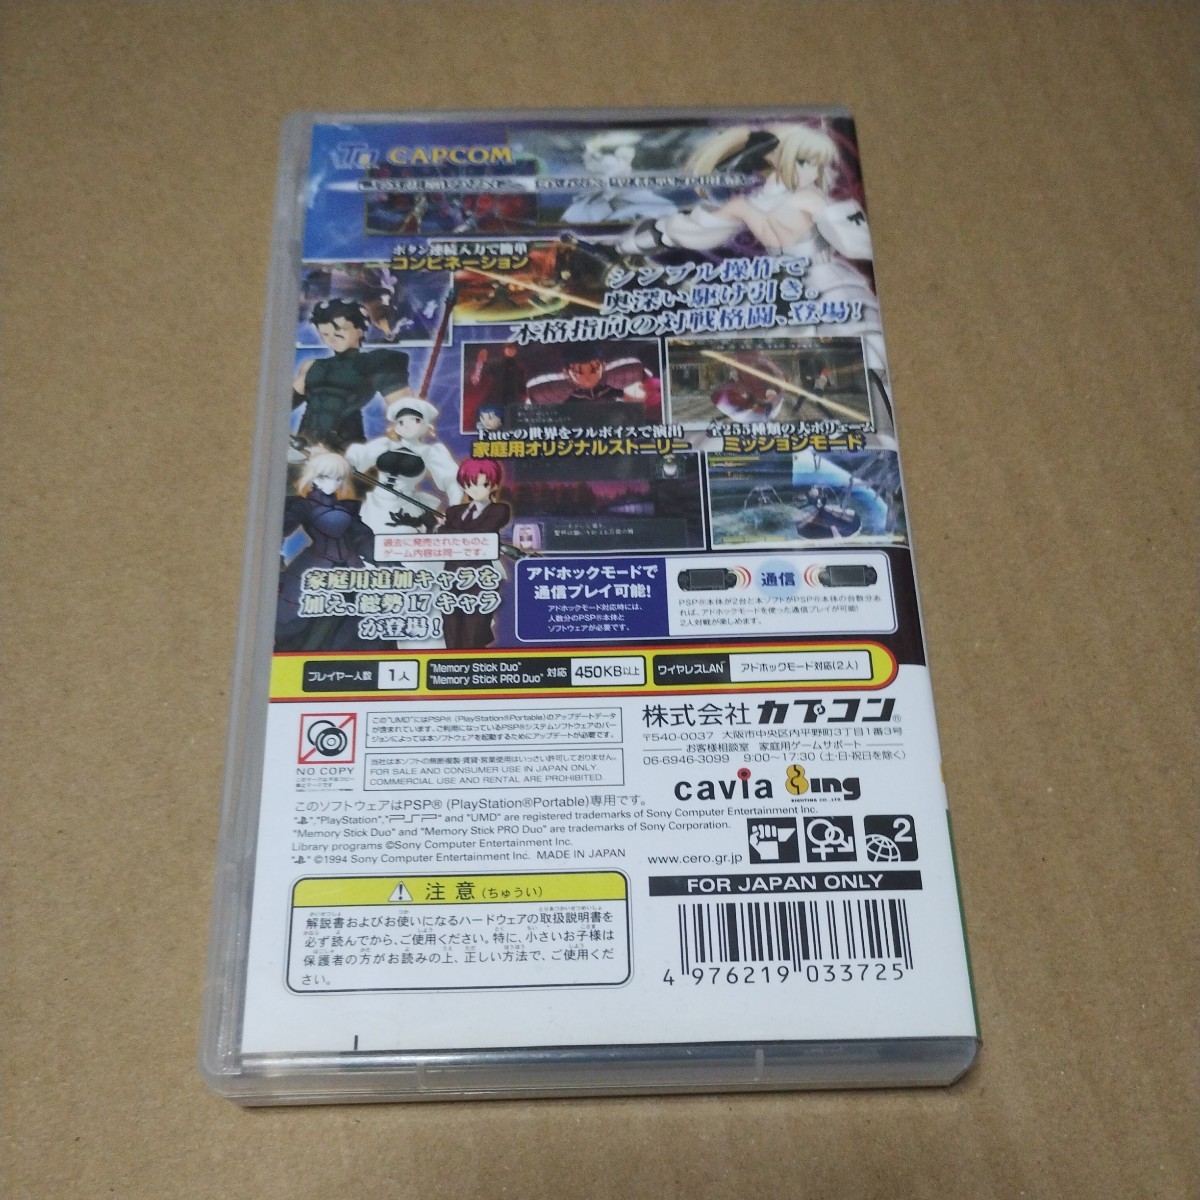 PSP フェイト アンリミテッドコード Fate Unlimited Codes PORTABLE Best版